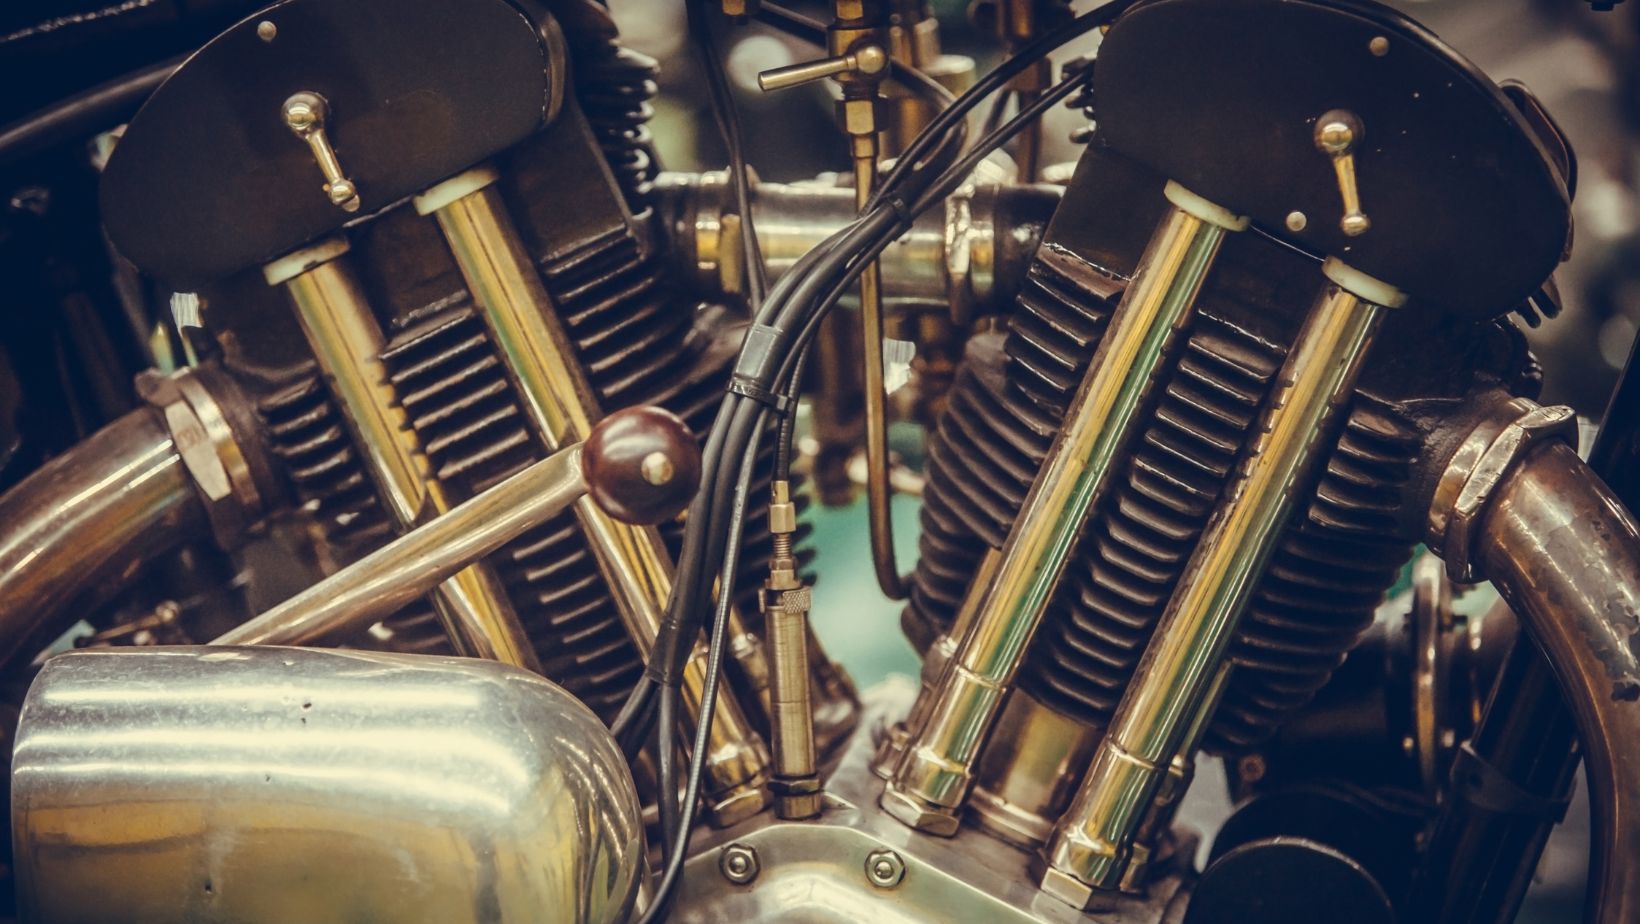 honda v twin motorcycle engine